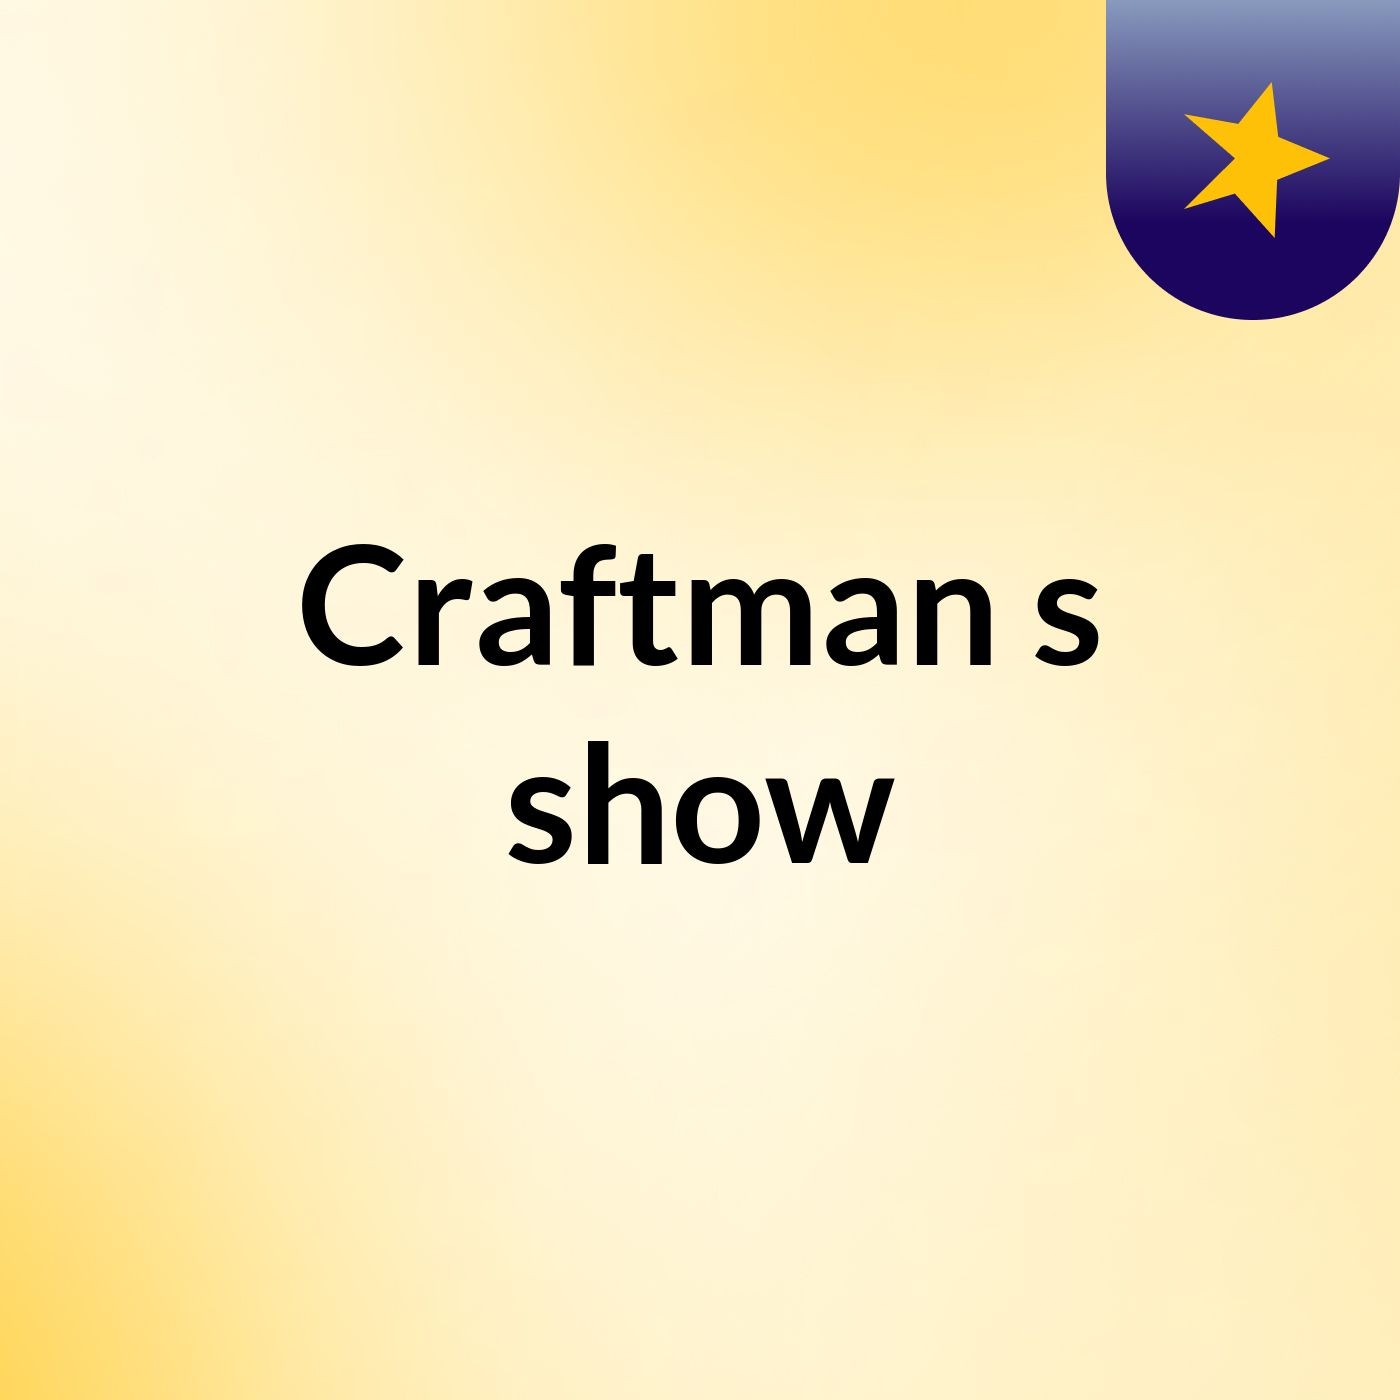 Craftman's show